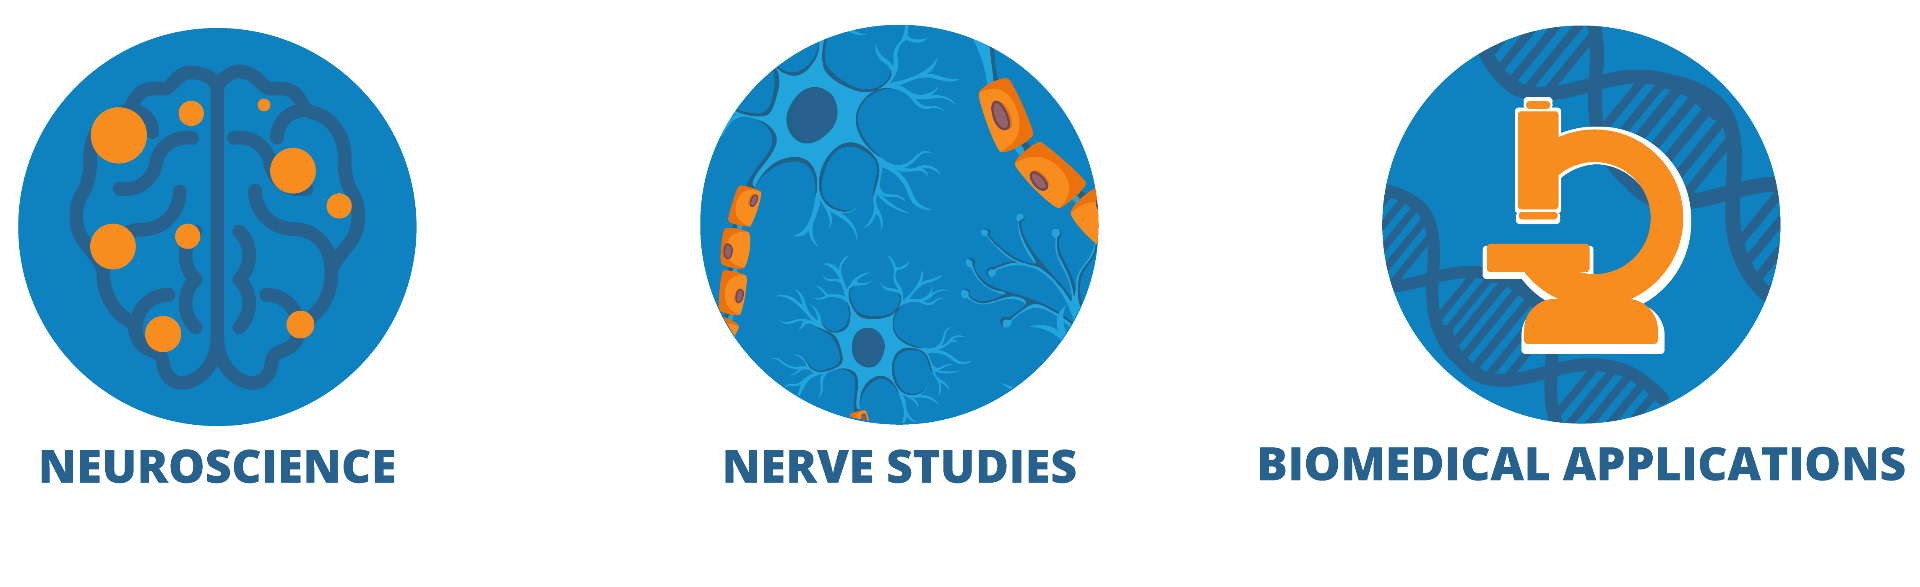 Kwik-Sil Applications Icons, Neuroscience, Nerve Studies, Biomedical Applications